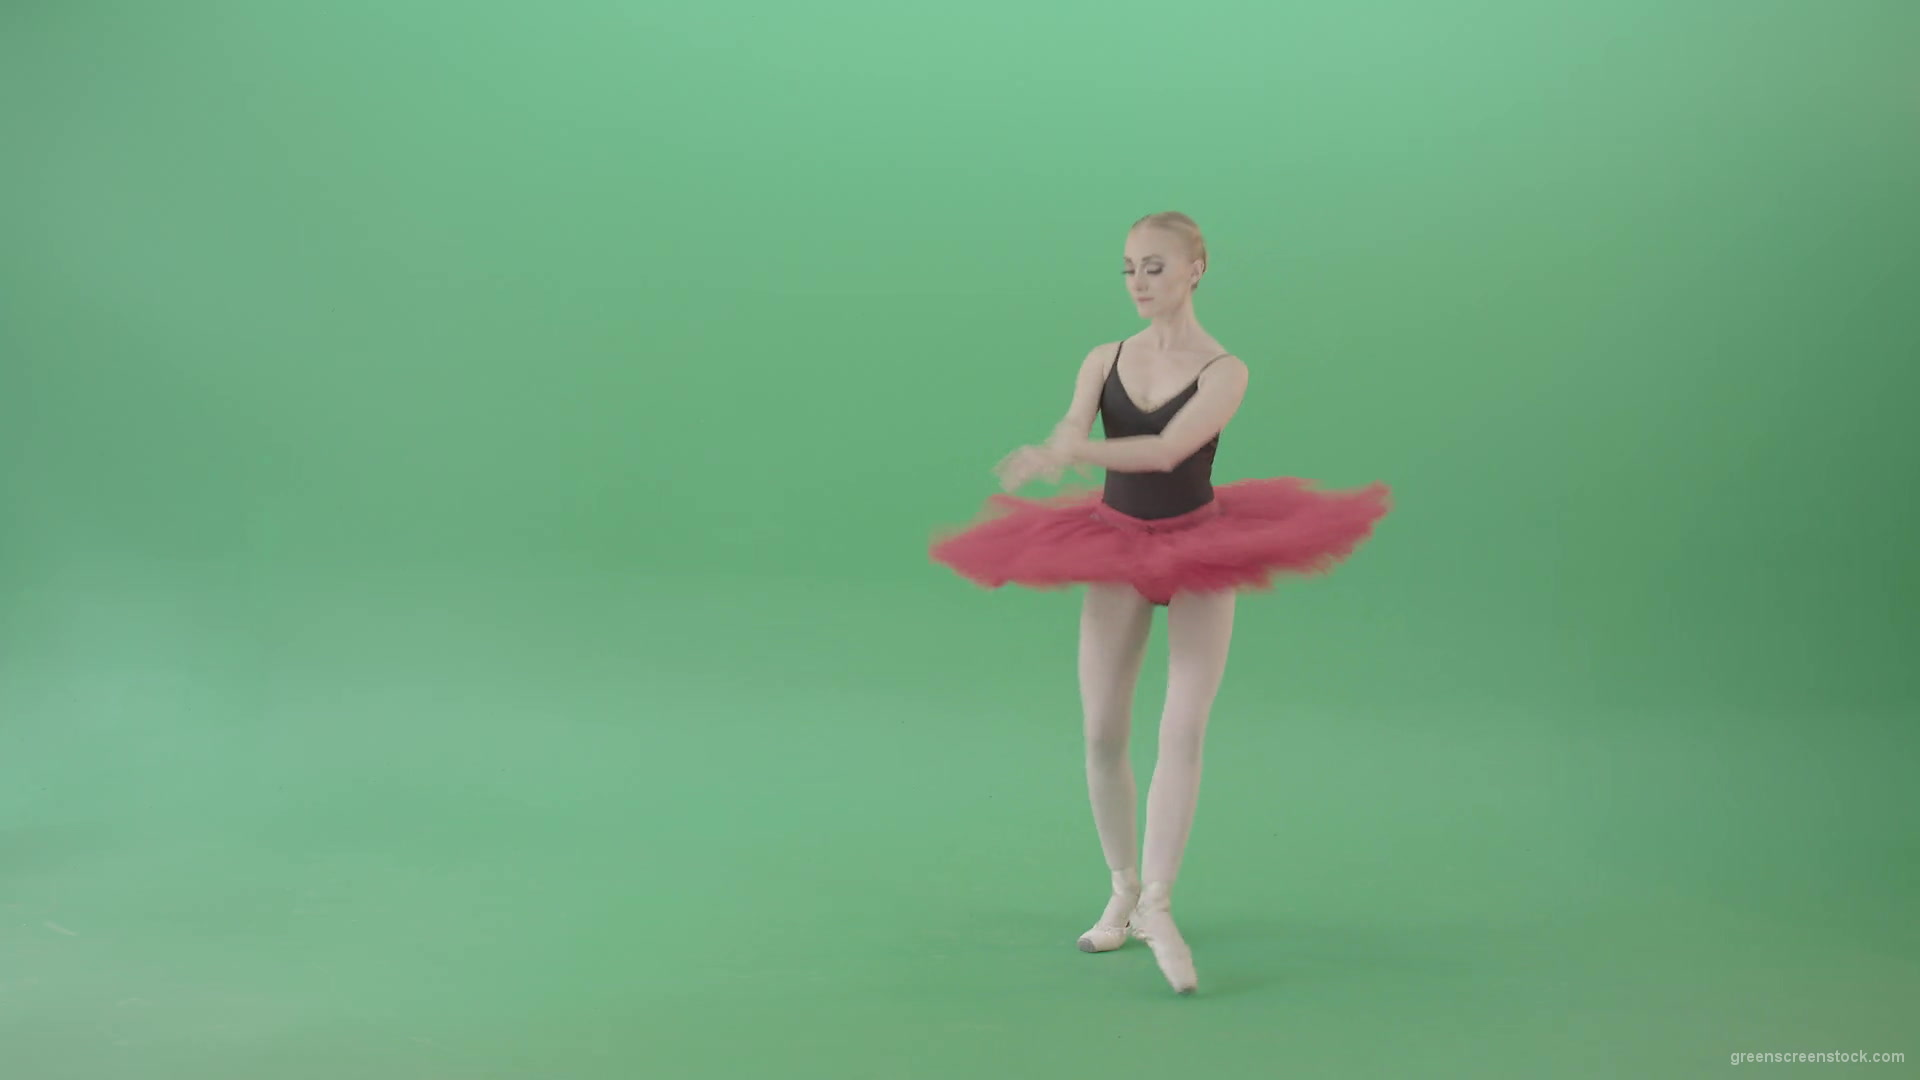 Classical-Ballerina-girl-dancing-red-black-ballet-on-green-screen-4K-Video-Footage-1920_005 Green Screen Stock